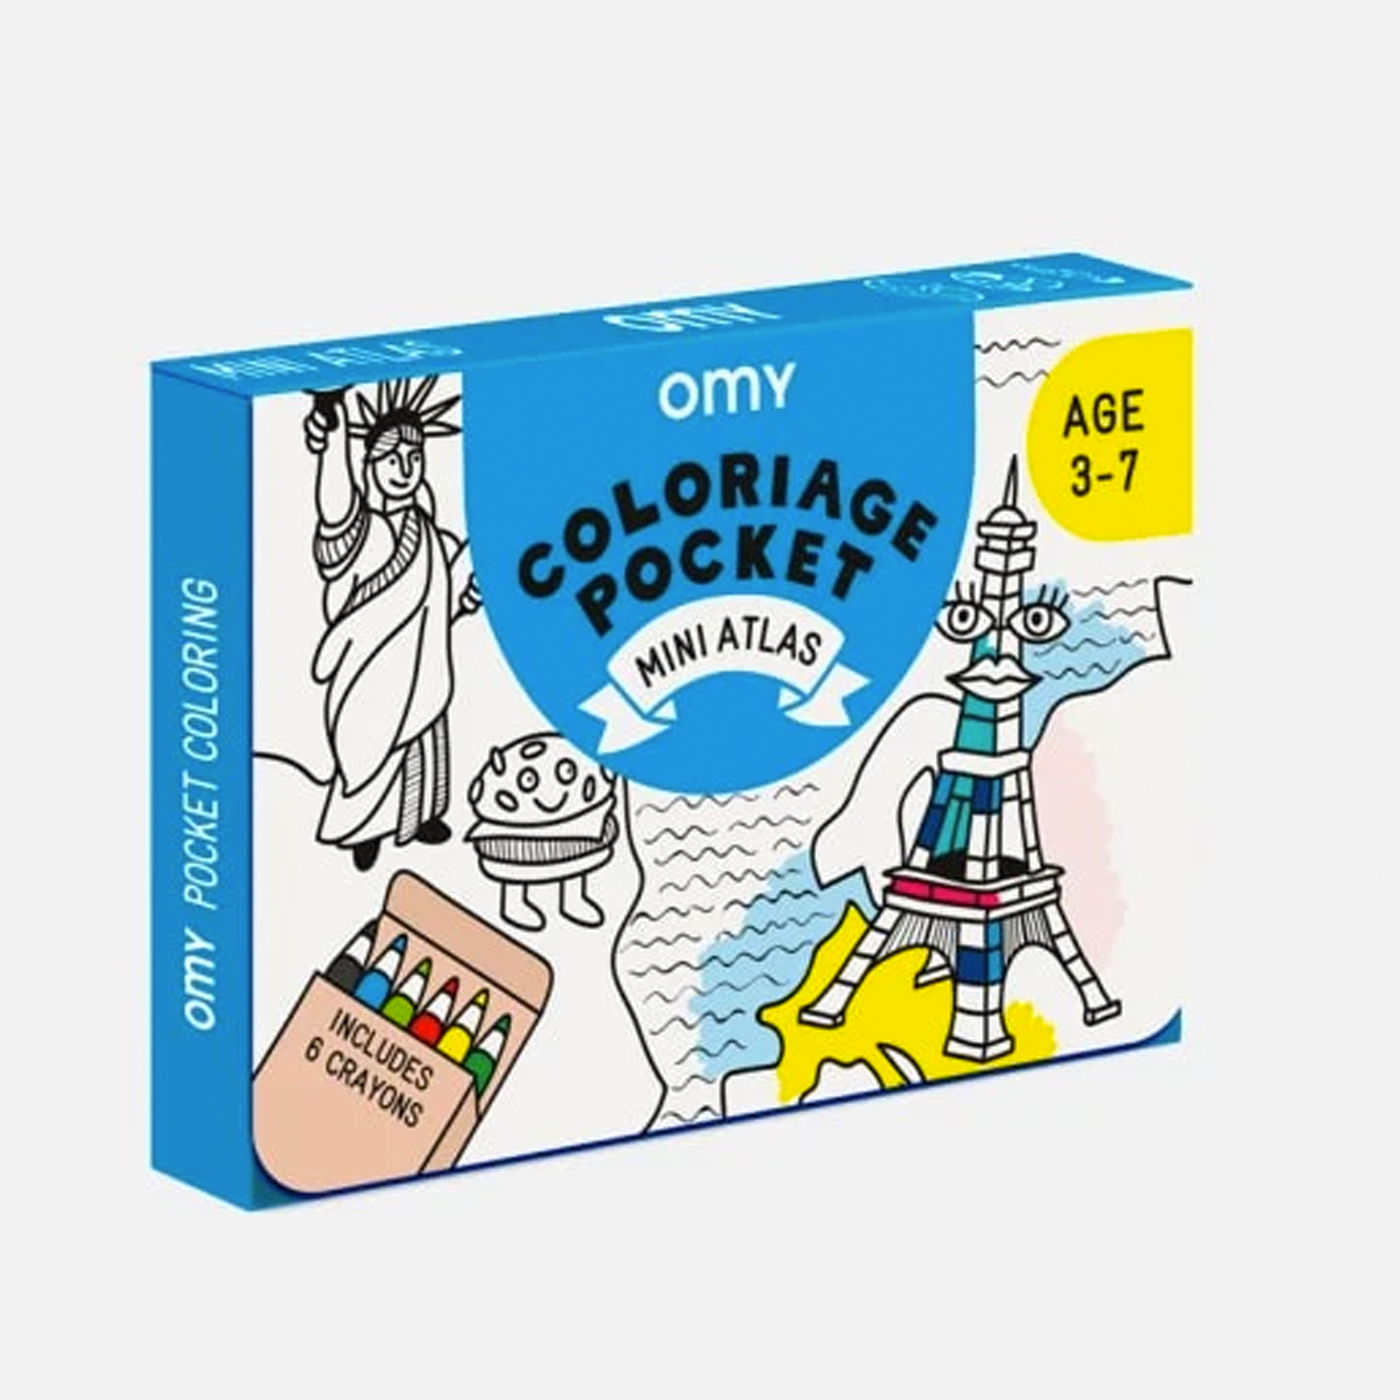  Omy Pocket Coloring  | Mini Atlas